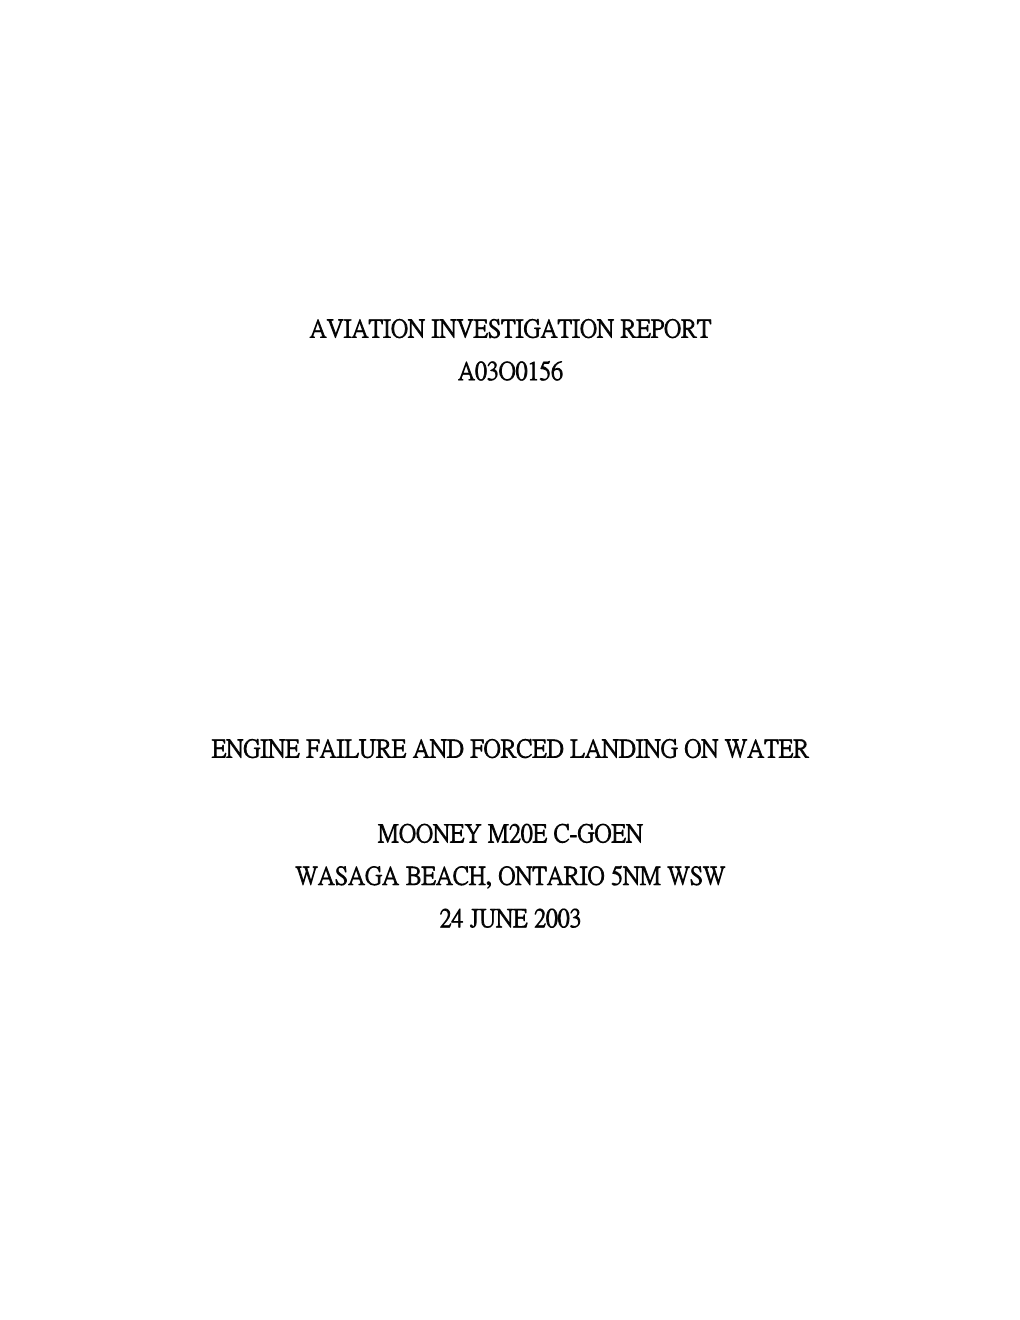 Aviation Investigation Report A03o0156 Engine Failure And